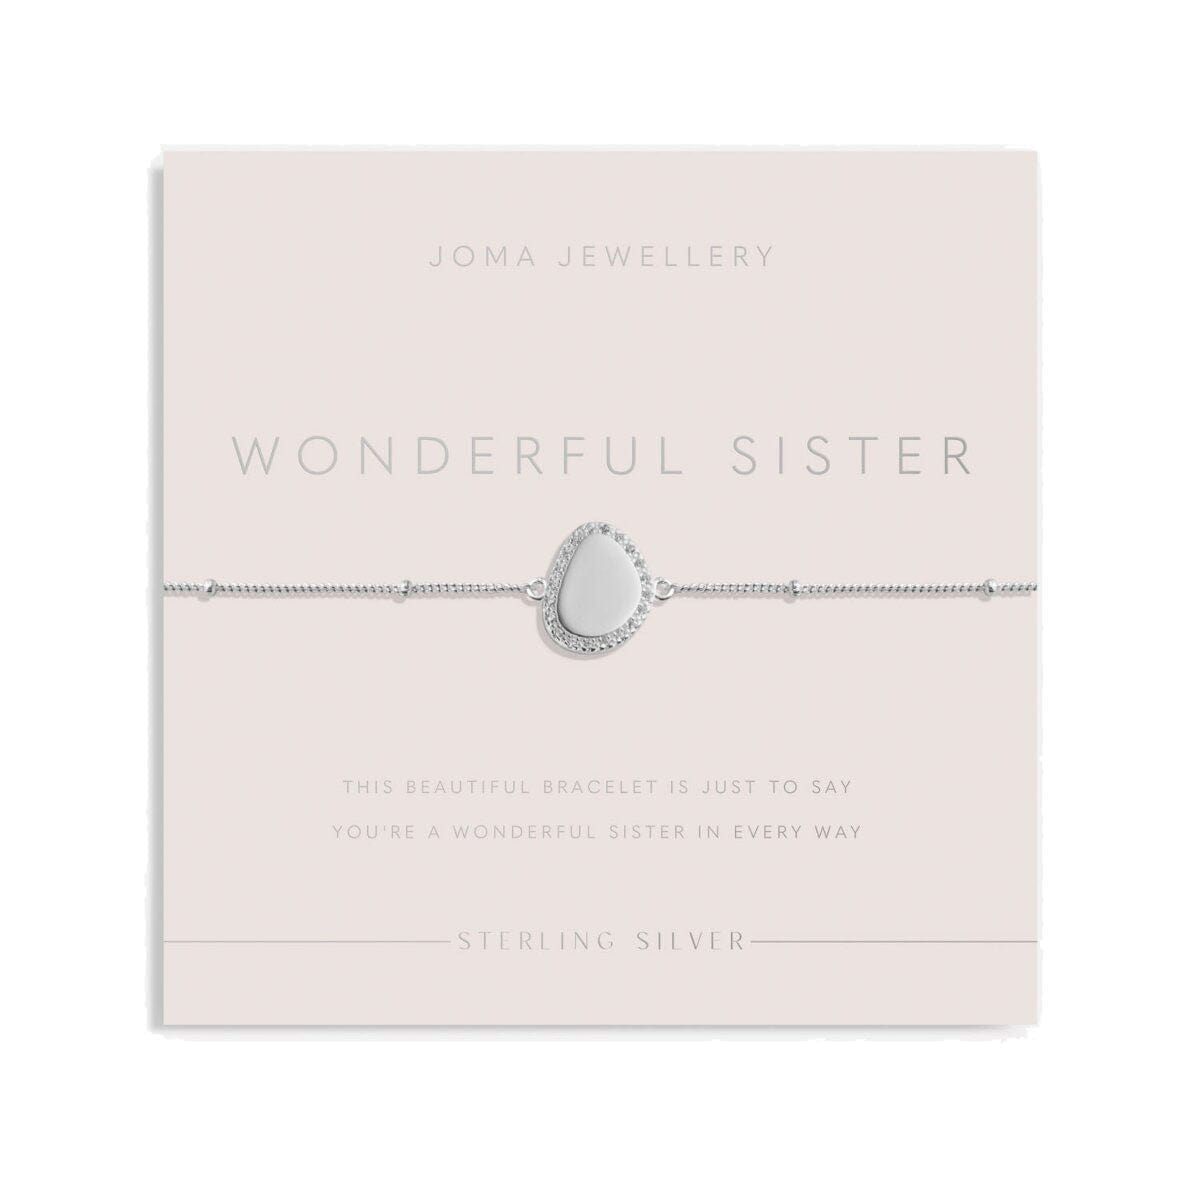 Joma Jewellery Bracelet Joma Jewellery Sterling Silver Bracelet - Wonderful Sister